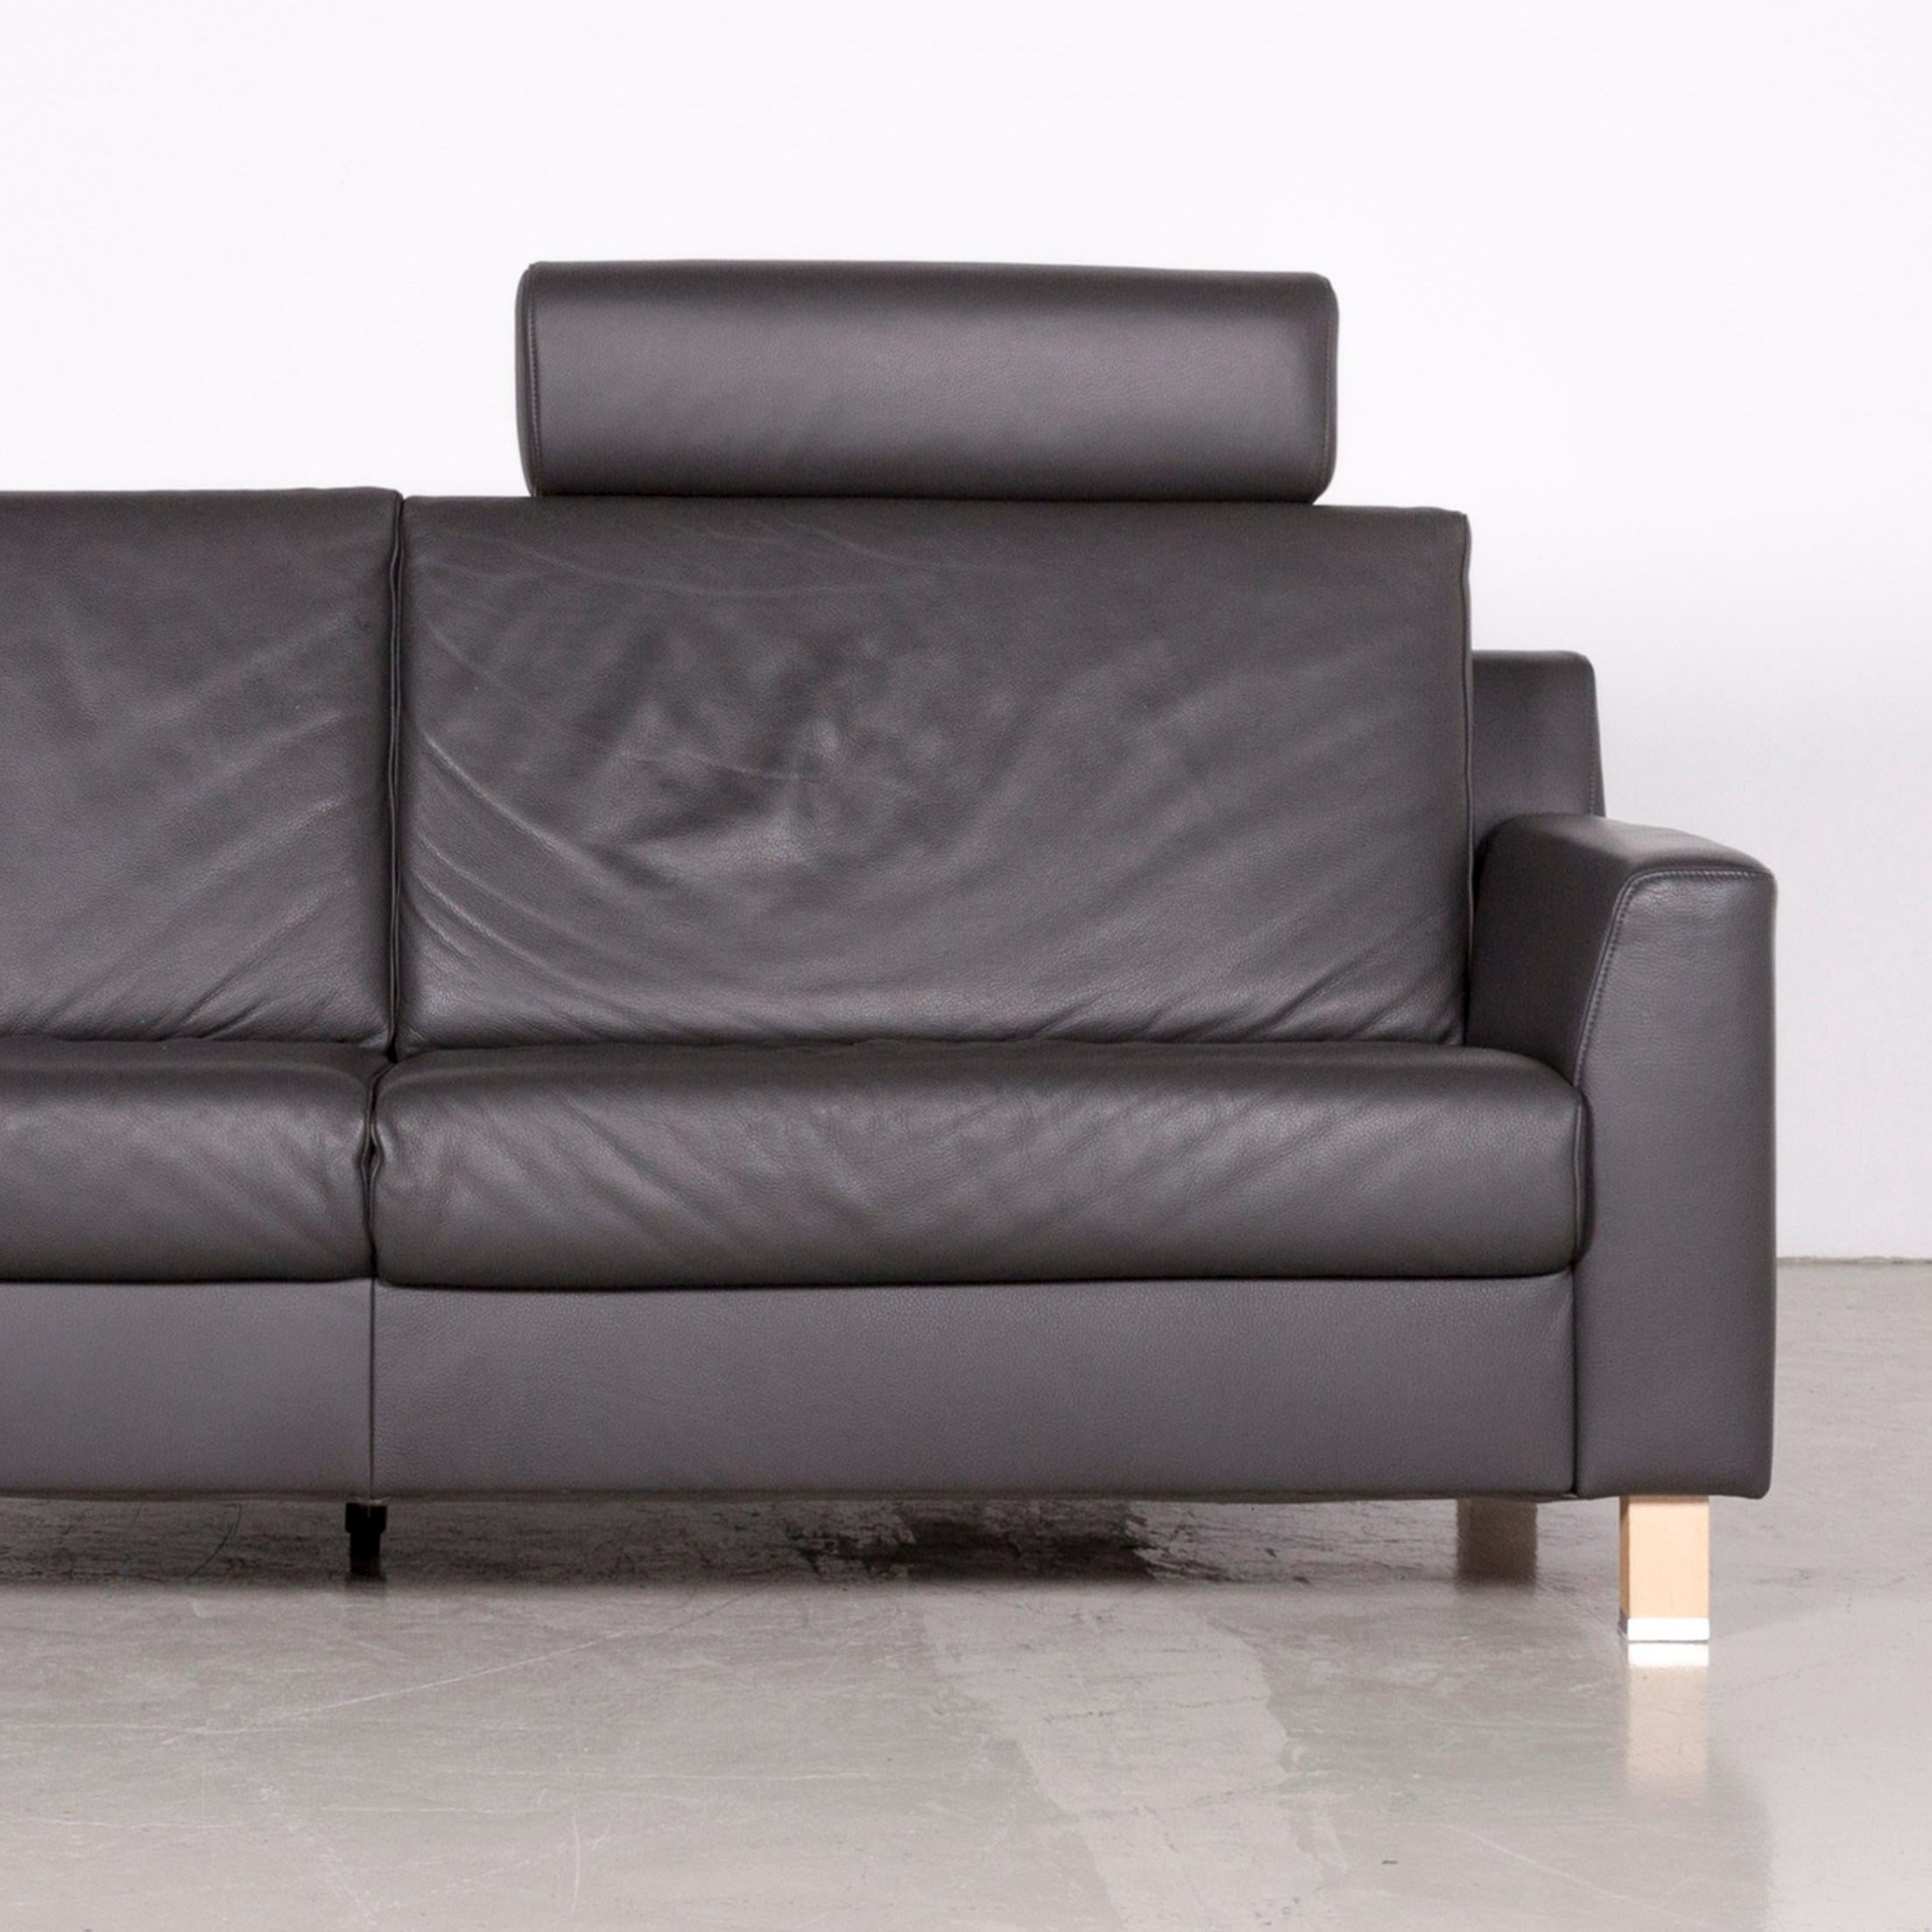 Ewald Schillig Flex Plus Designer Leather Sofa Grey Three-Seat Couch In Good Condition For Sale In Cologne, DE